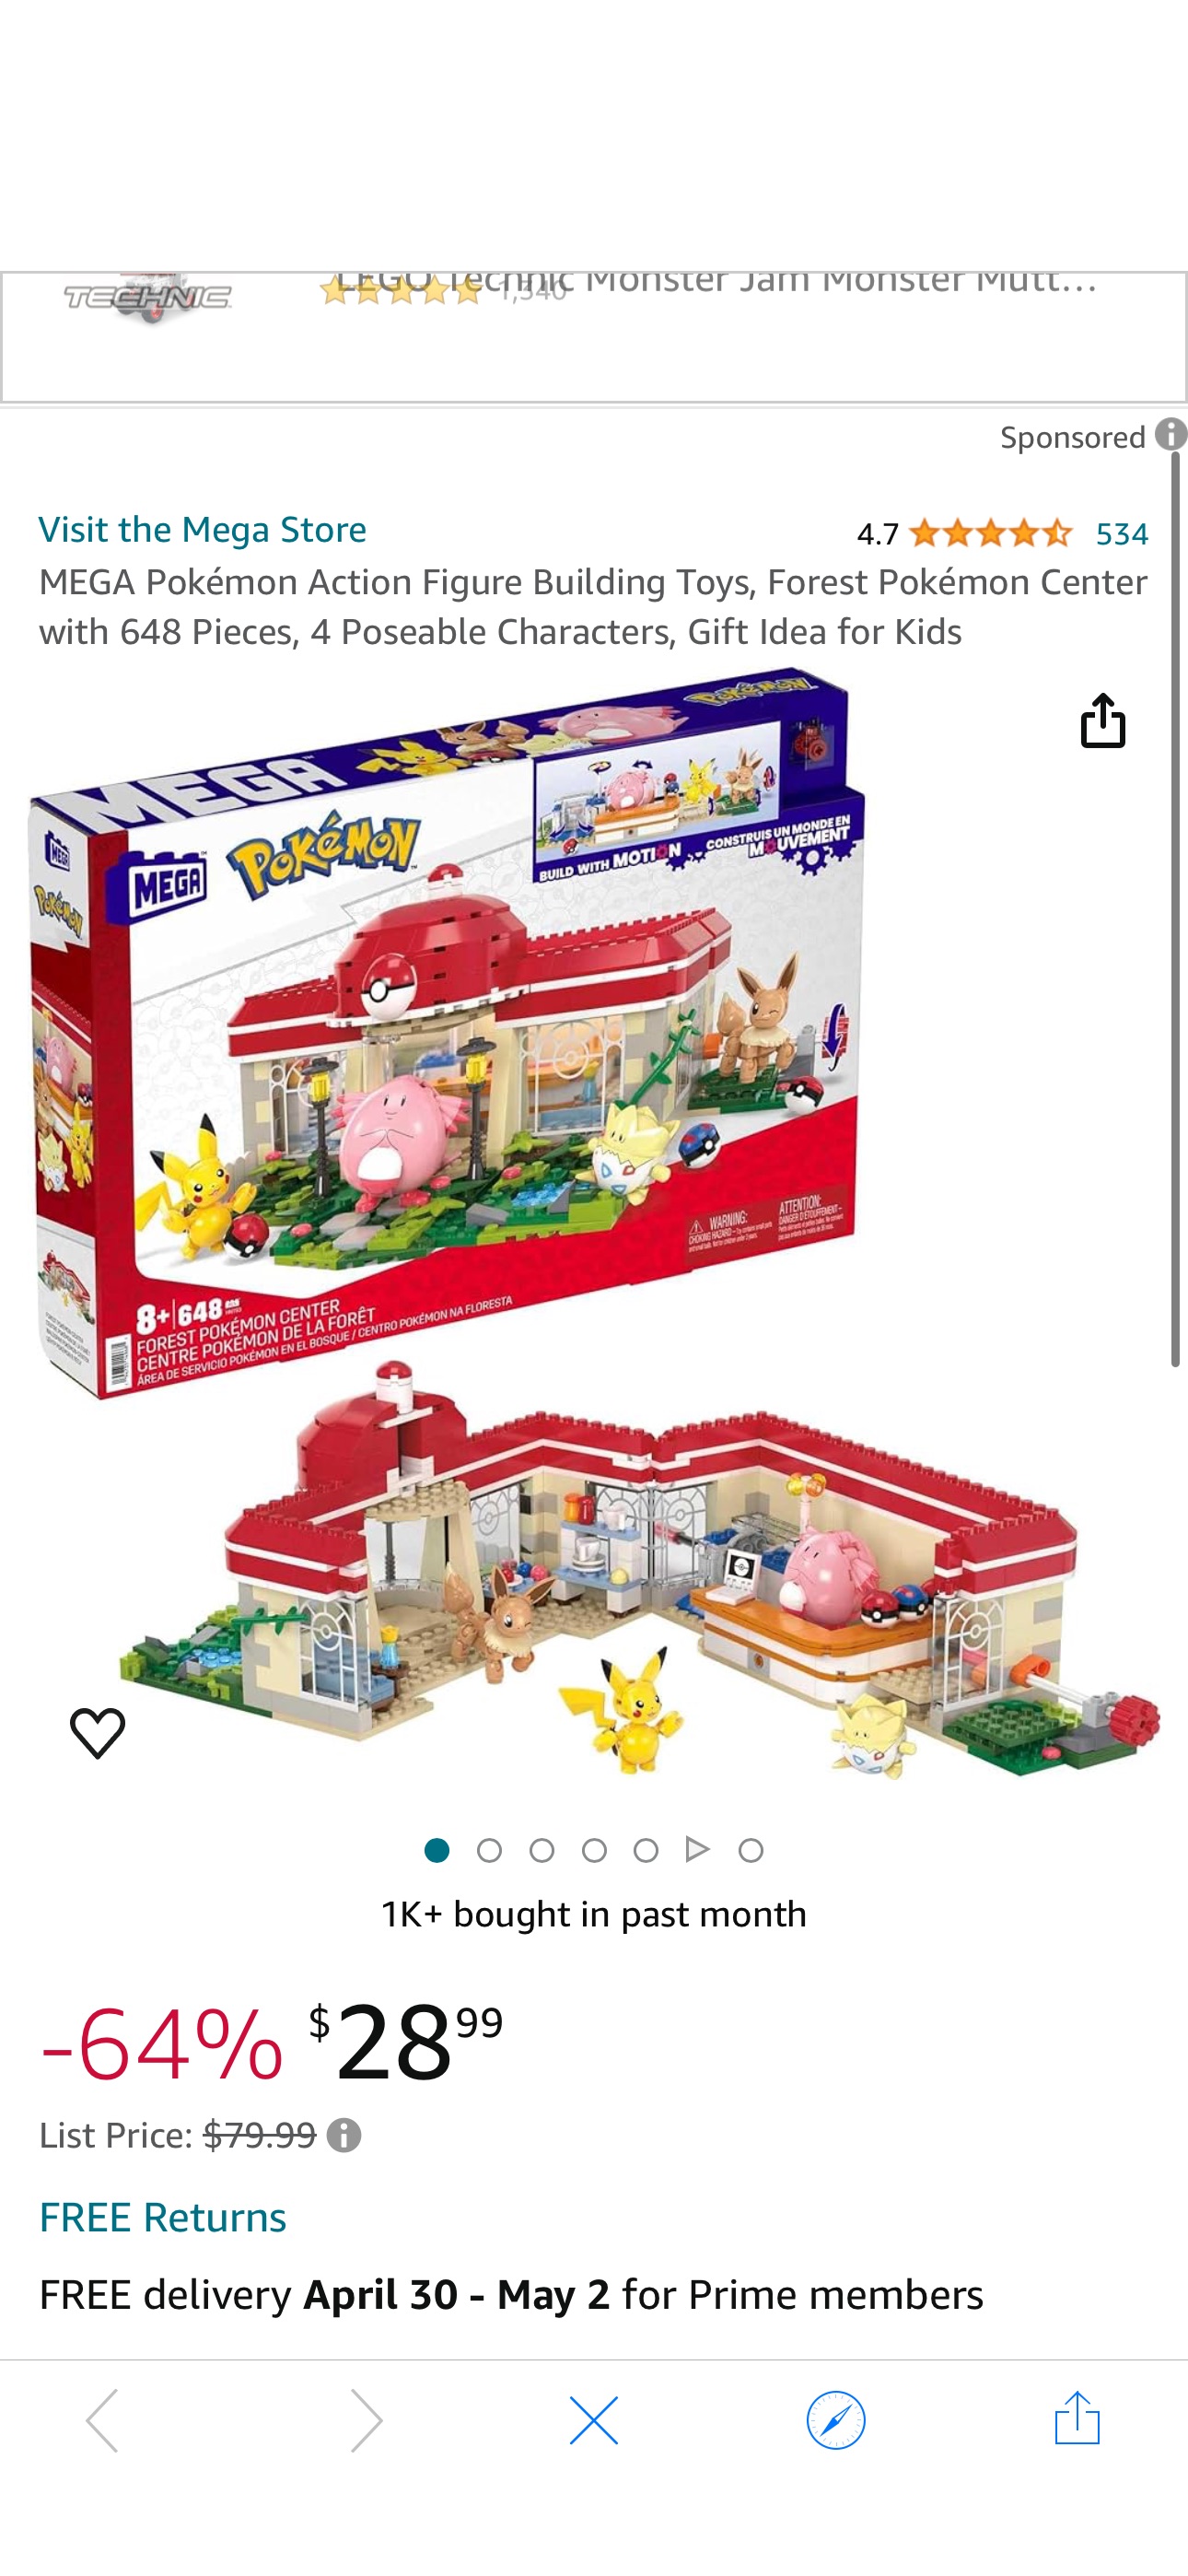 Amazon.com: MEGA Pokémon Action Figure Building Toys, Forest Pokémon Center with 648 Pieces, 4 Poseable Characters, Gift Idea for Kids : Toys & Games